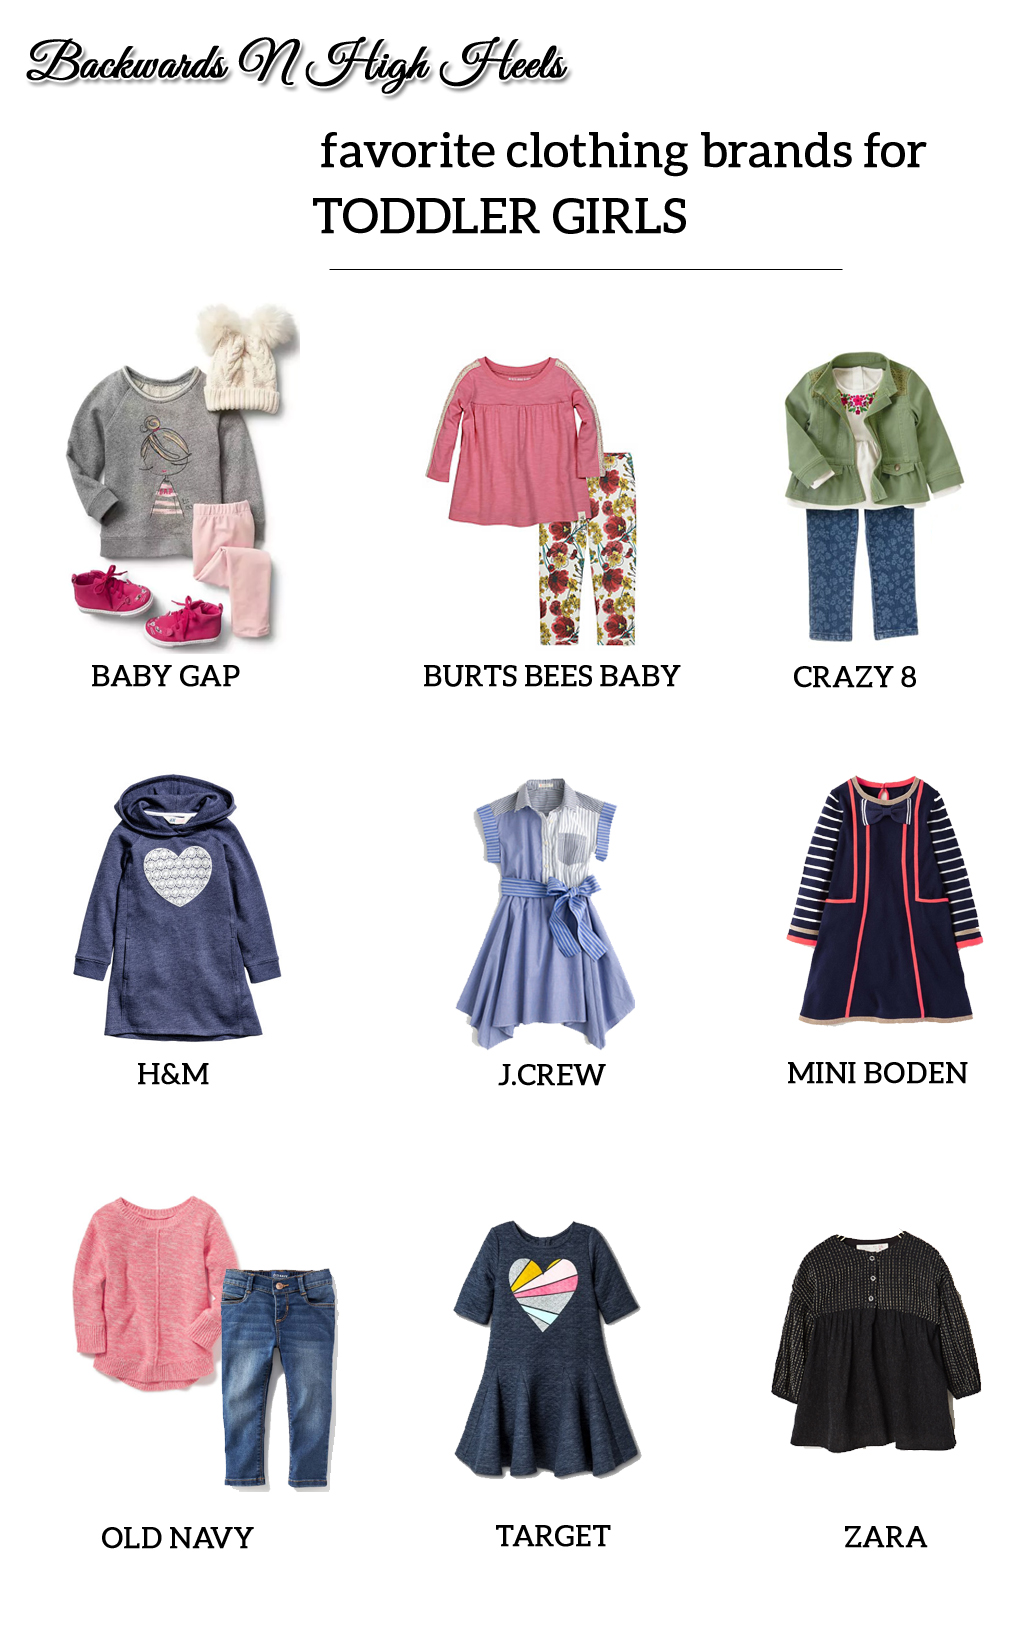 Favorite Clothing Brands for Toddler Girls